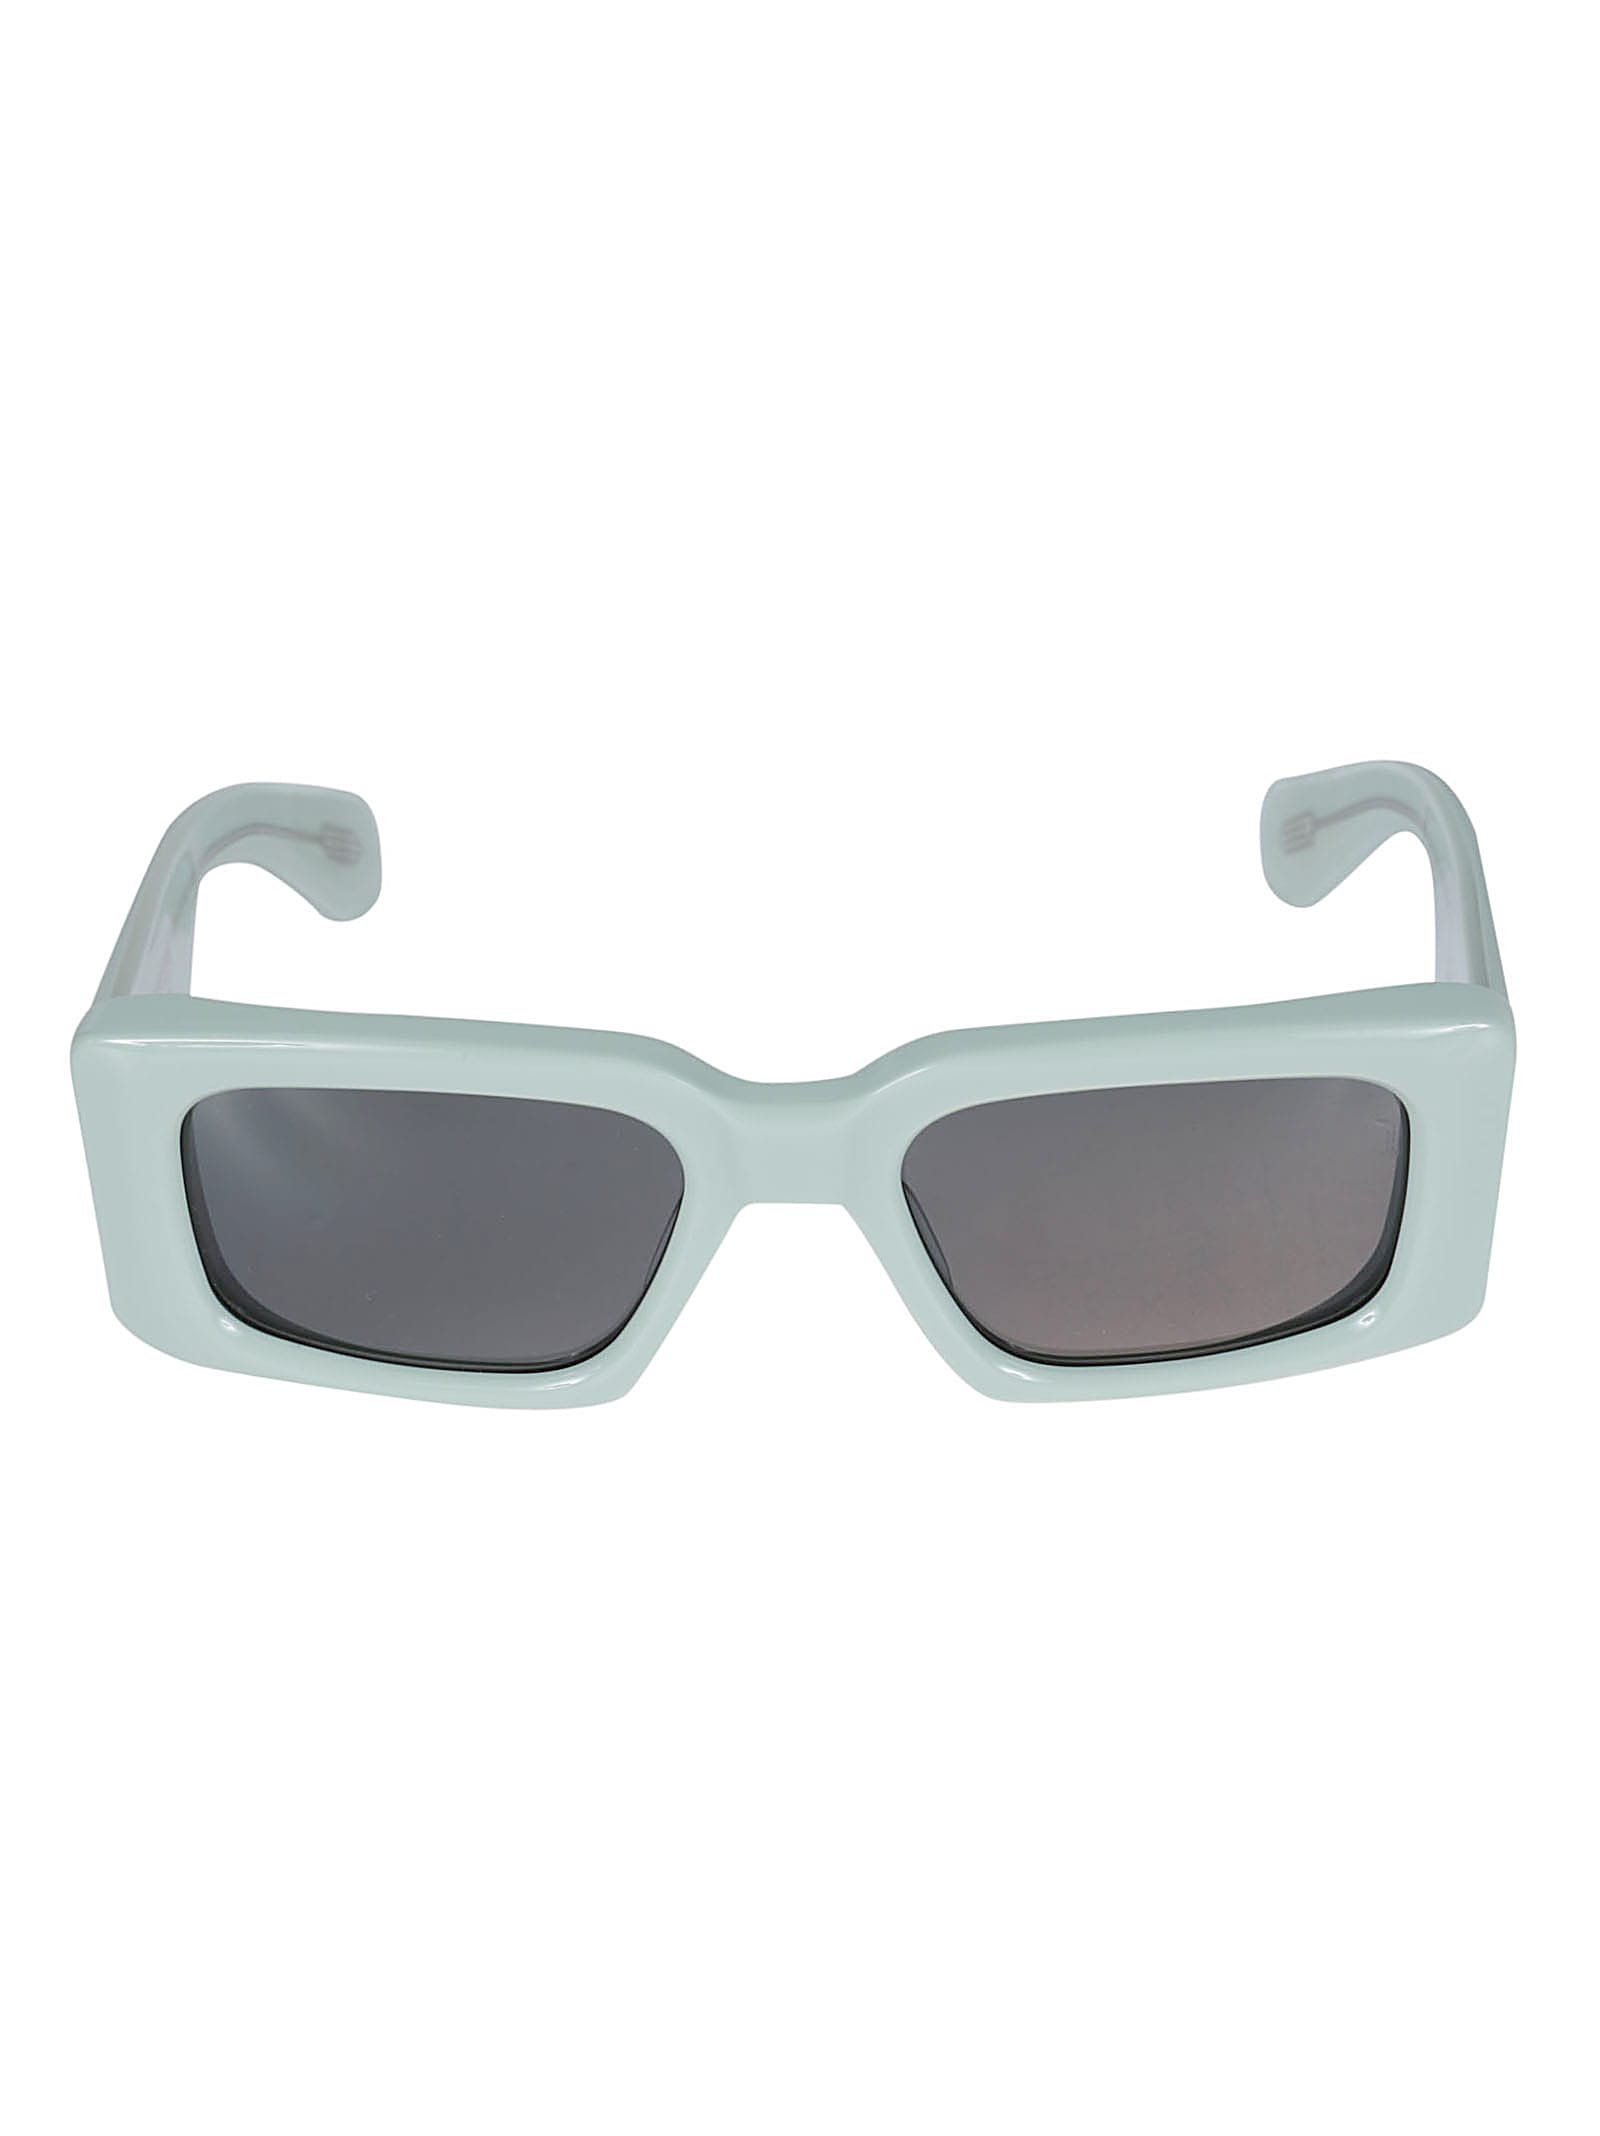 Jacques Marie Mage Octagon Lens Sunglasses